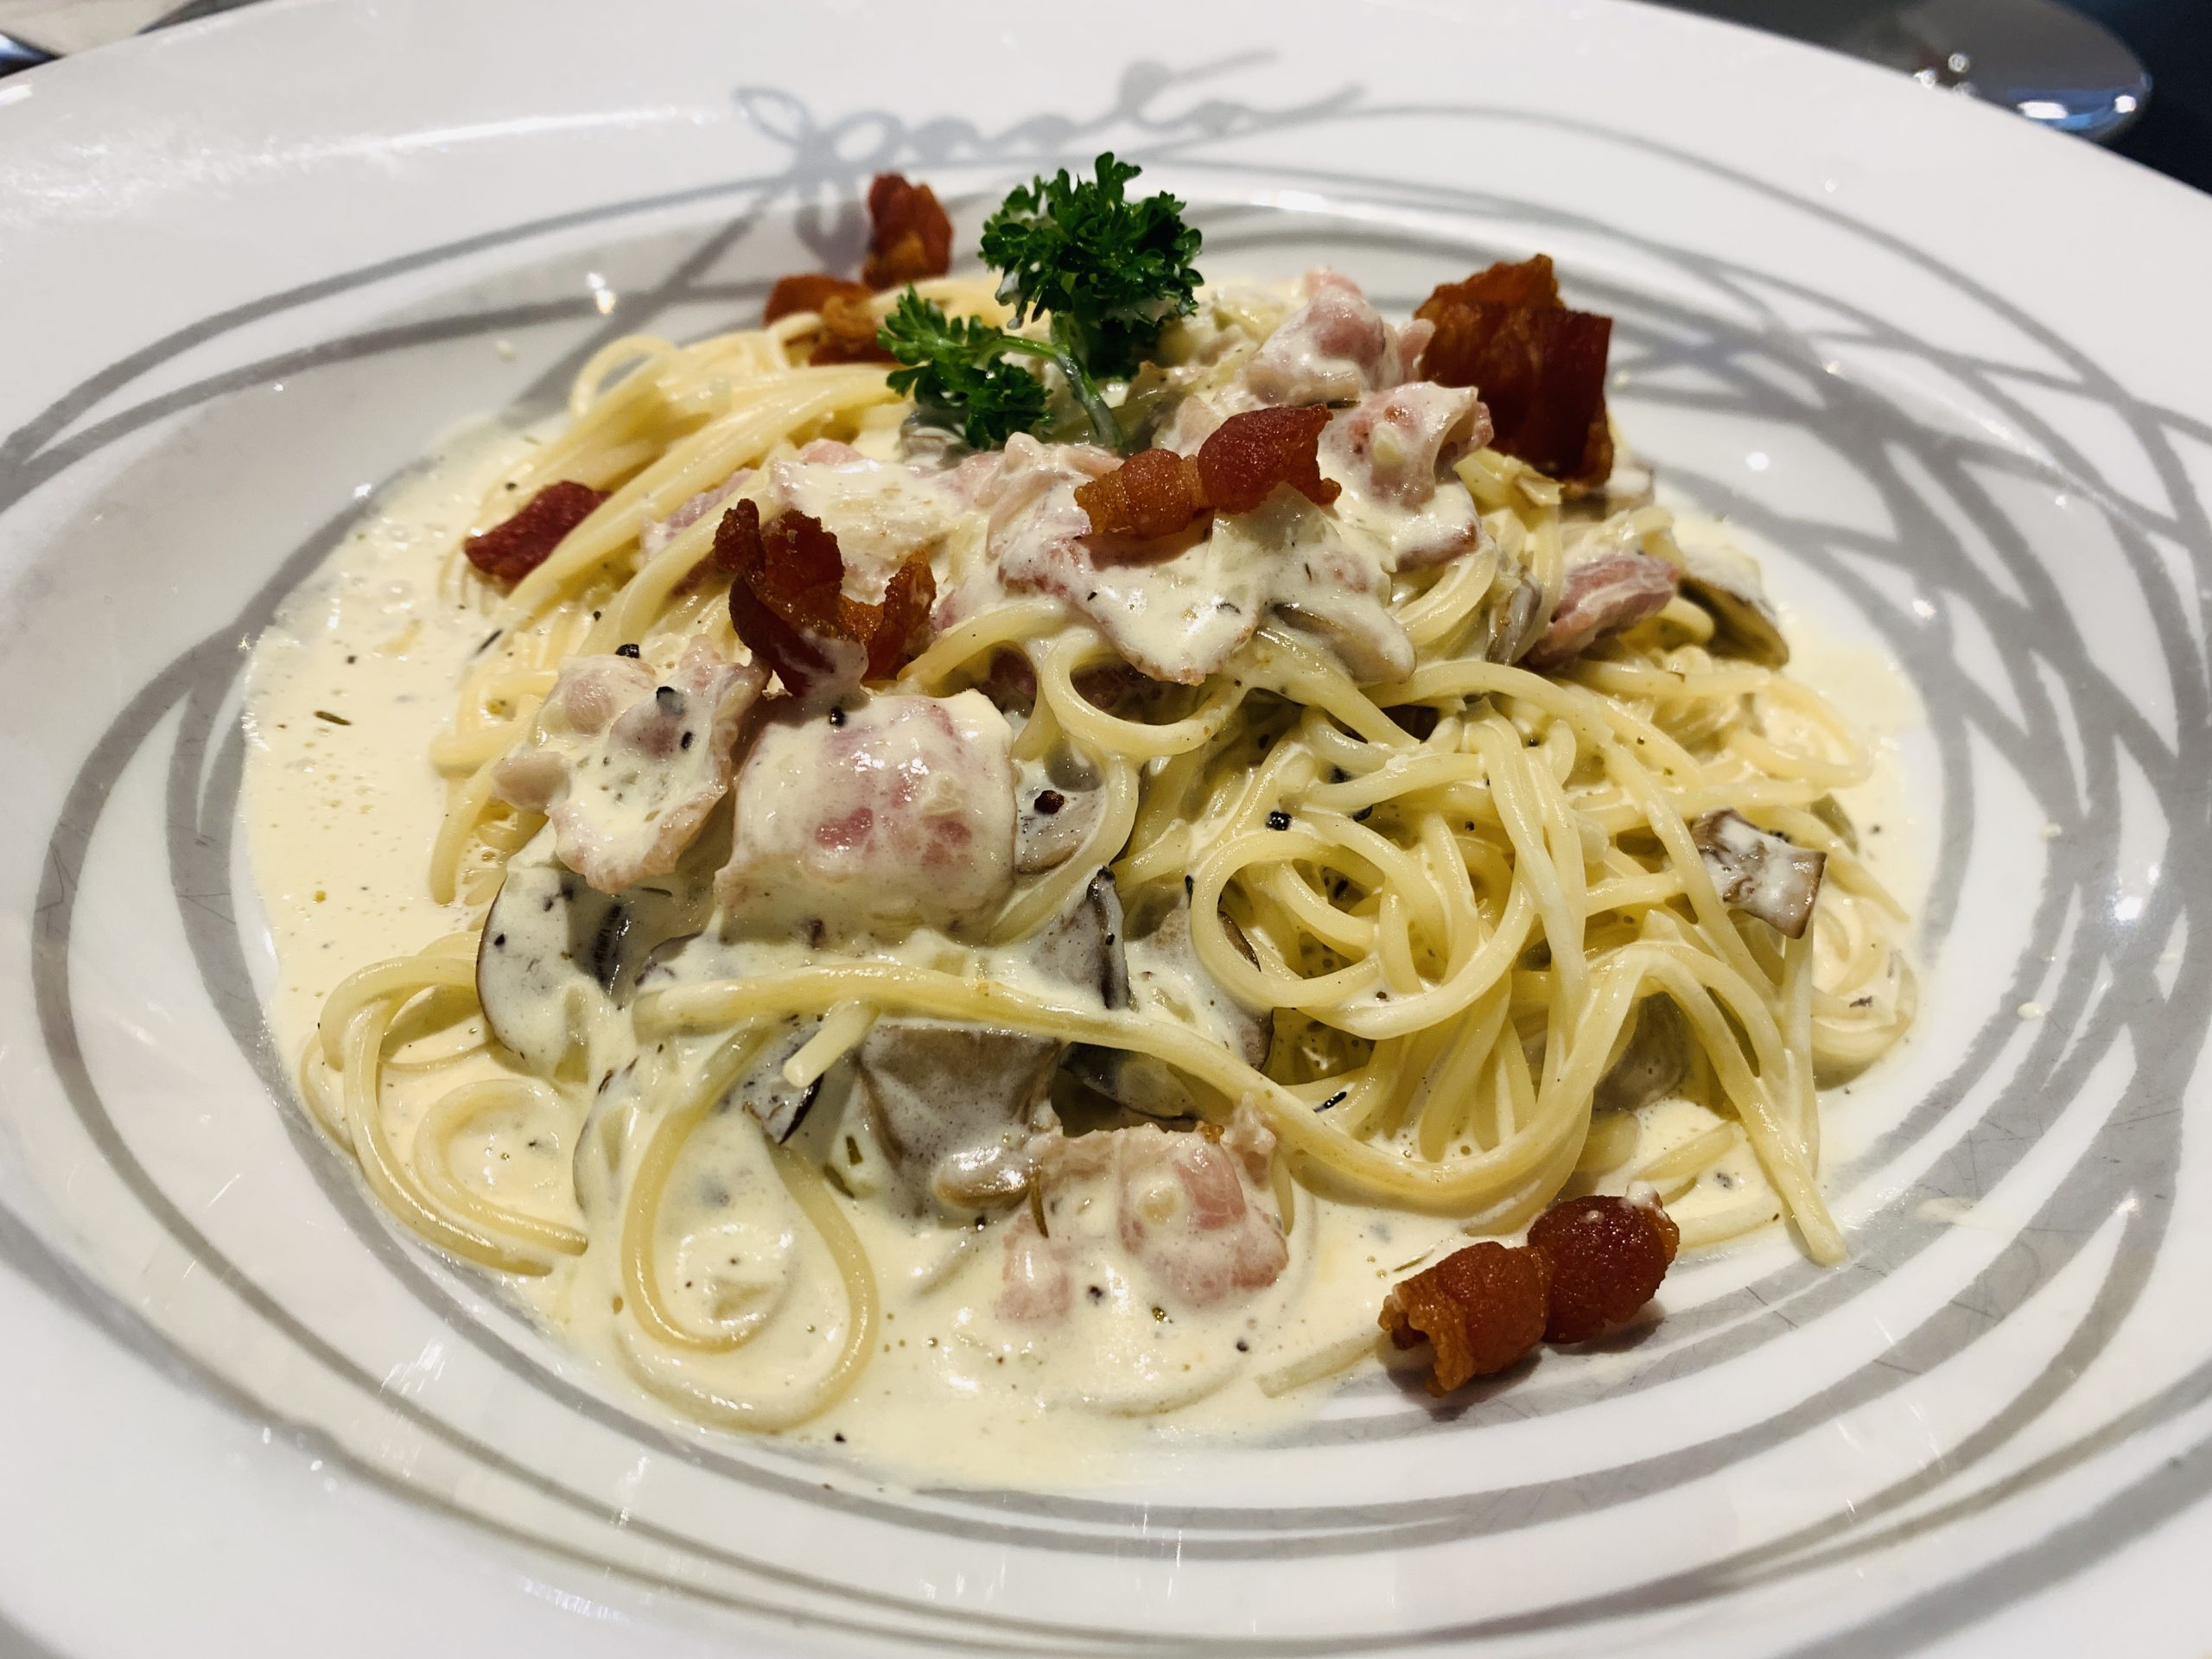 Greyhound Cafe - Spaghetti Carbonara in Light Cream Sauce